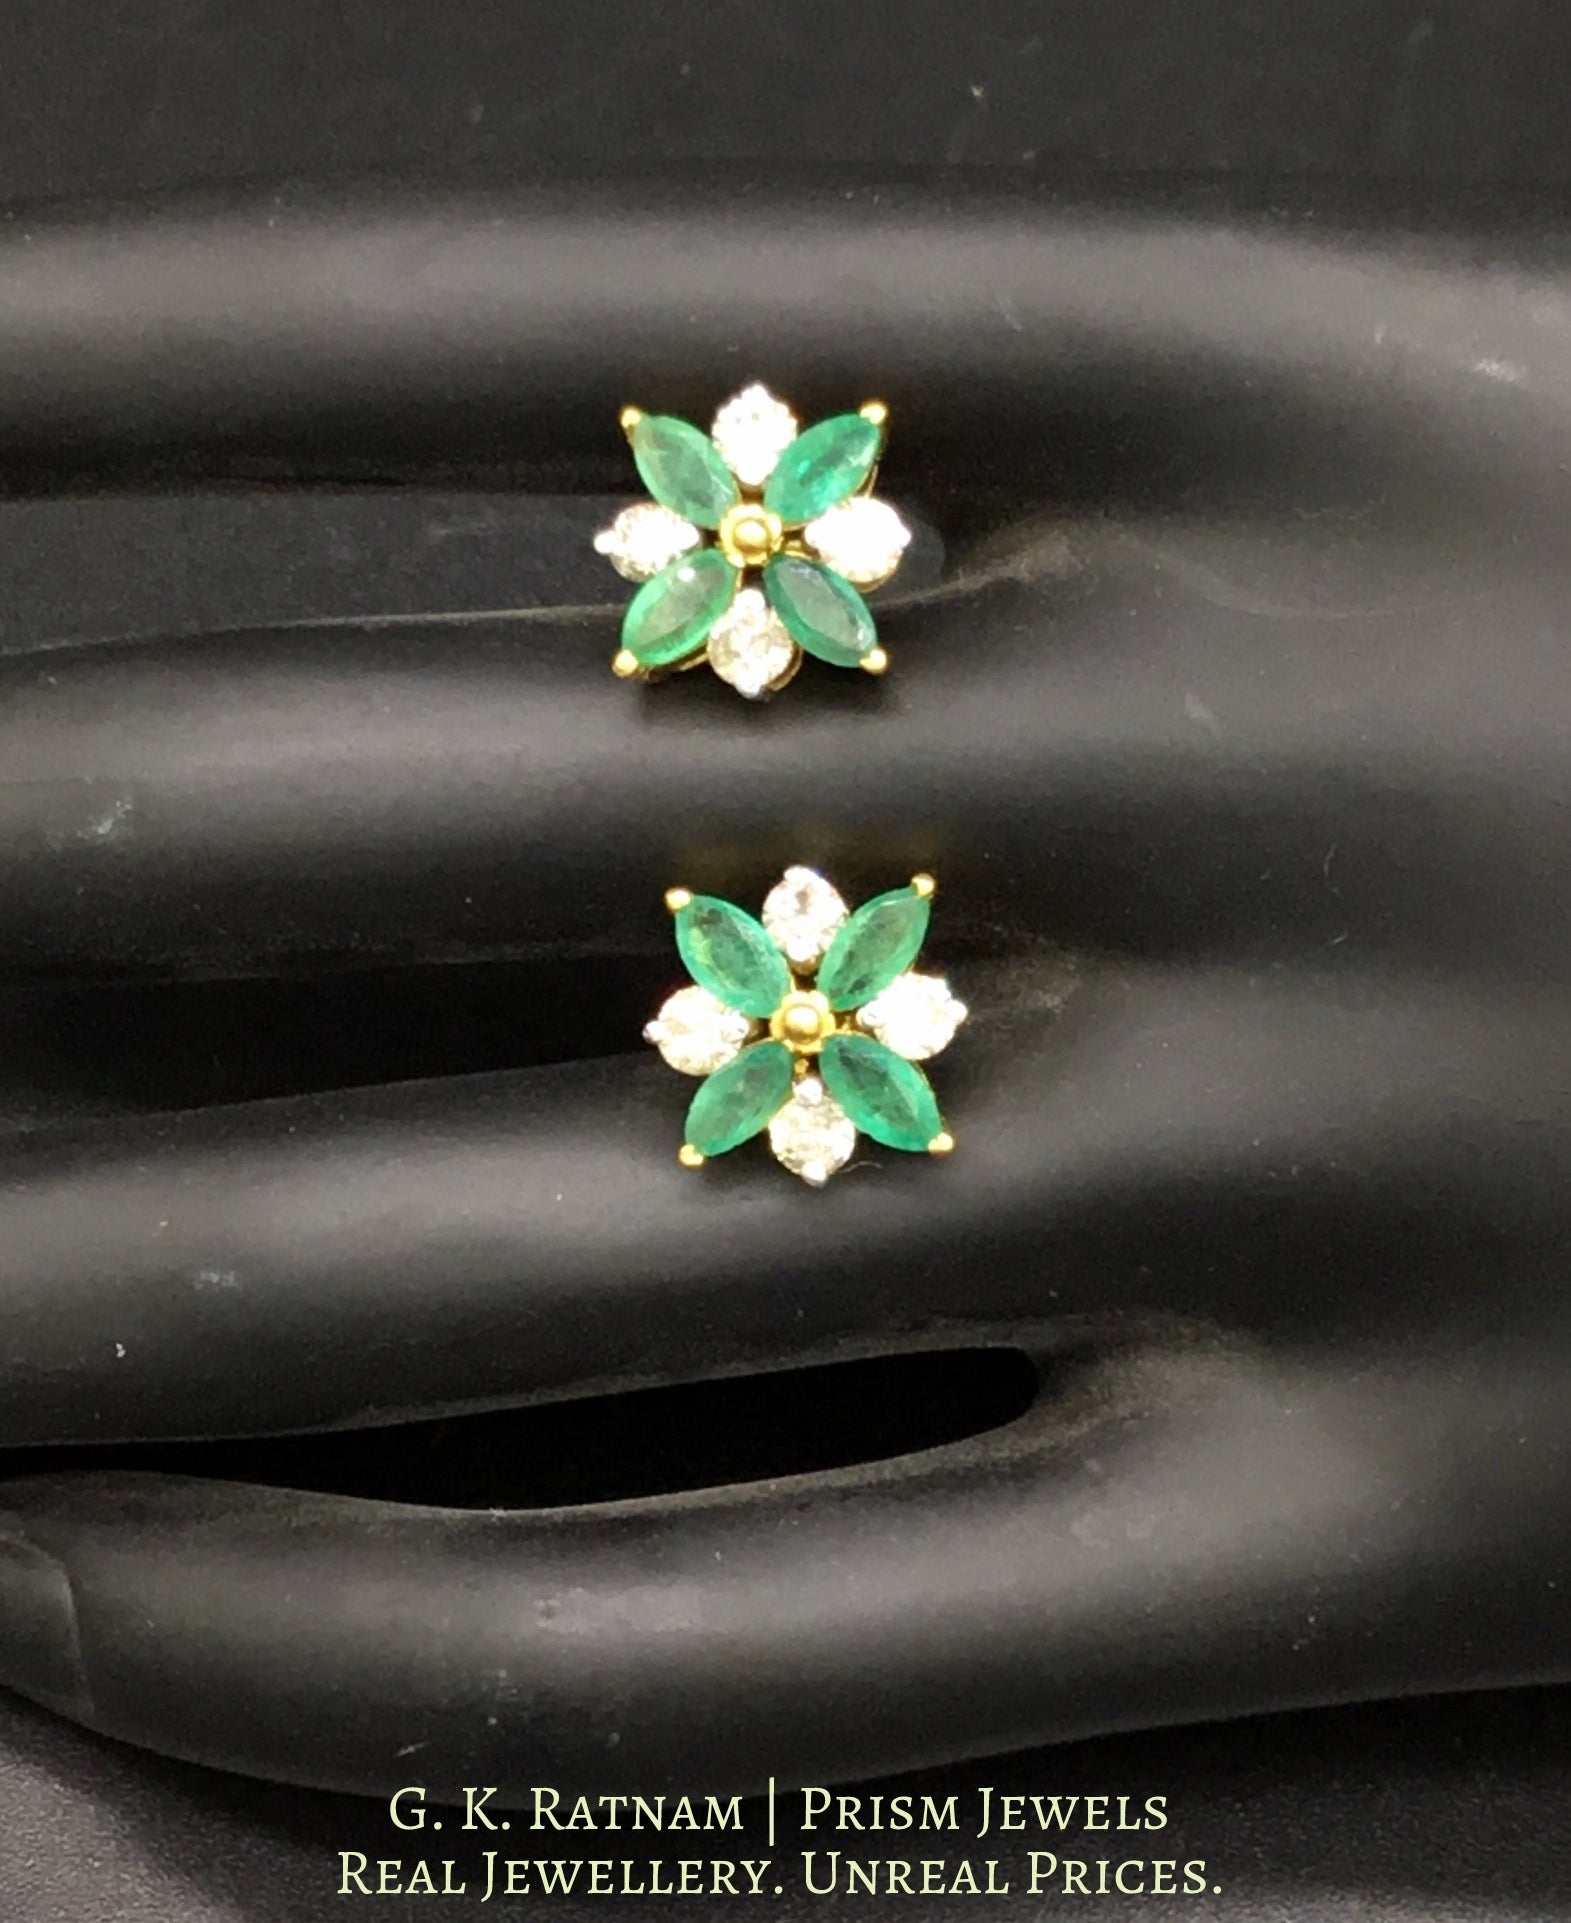 14k Gold and Diamond Tops / Studs Earring Pair with Emerald Marquises - gold diamond polki kundan meena jadau jewellery